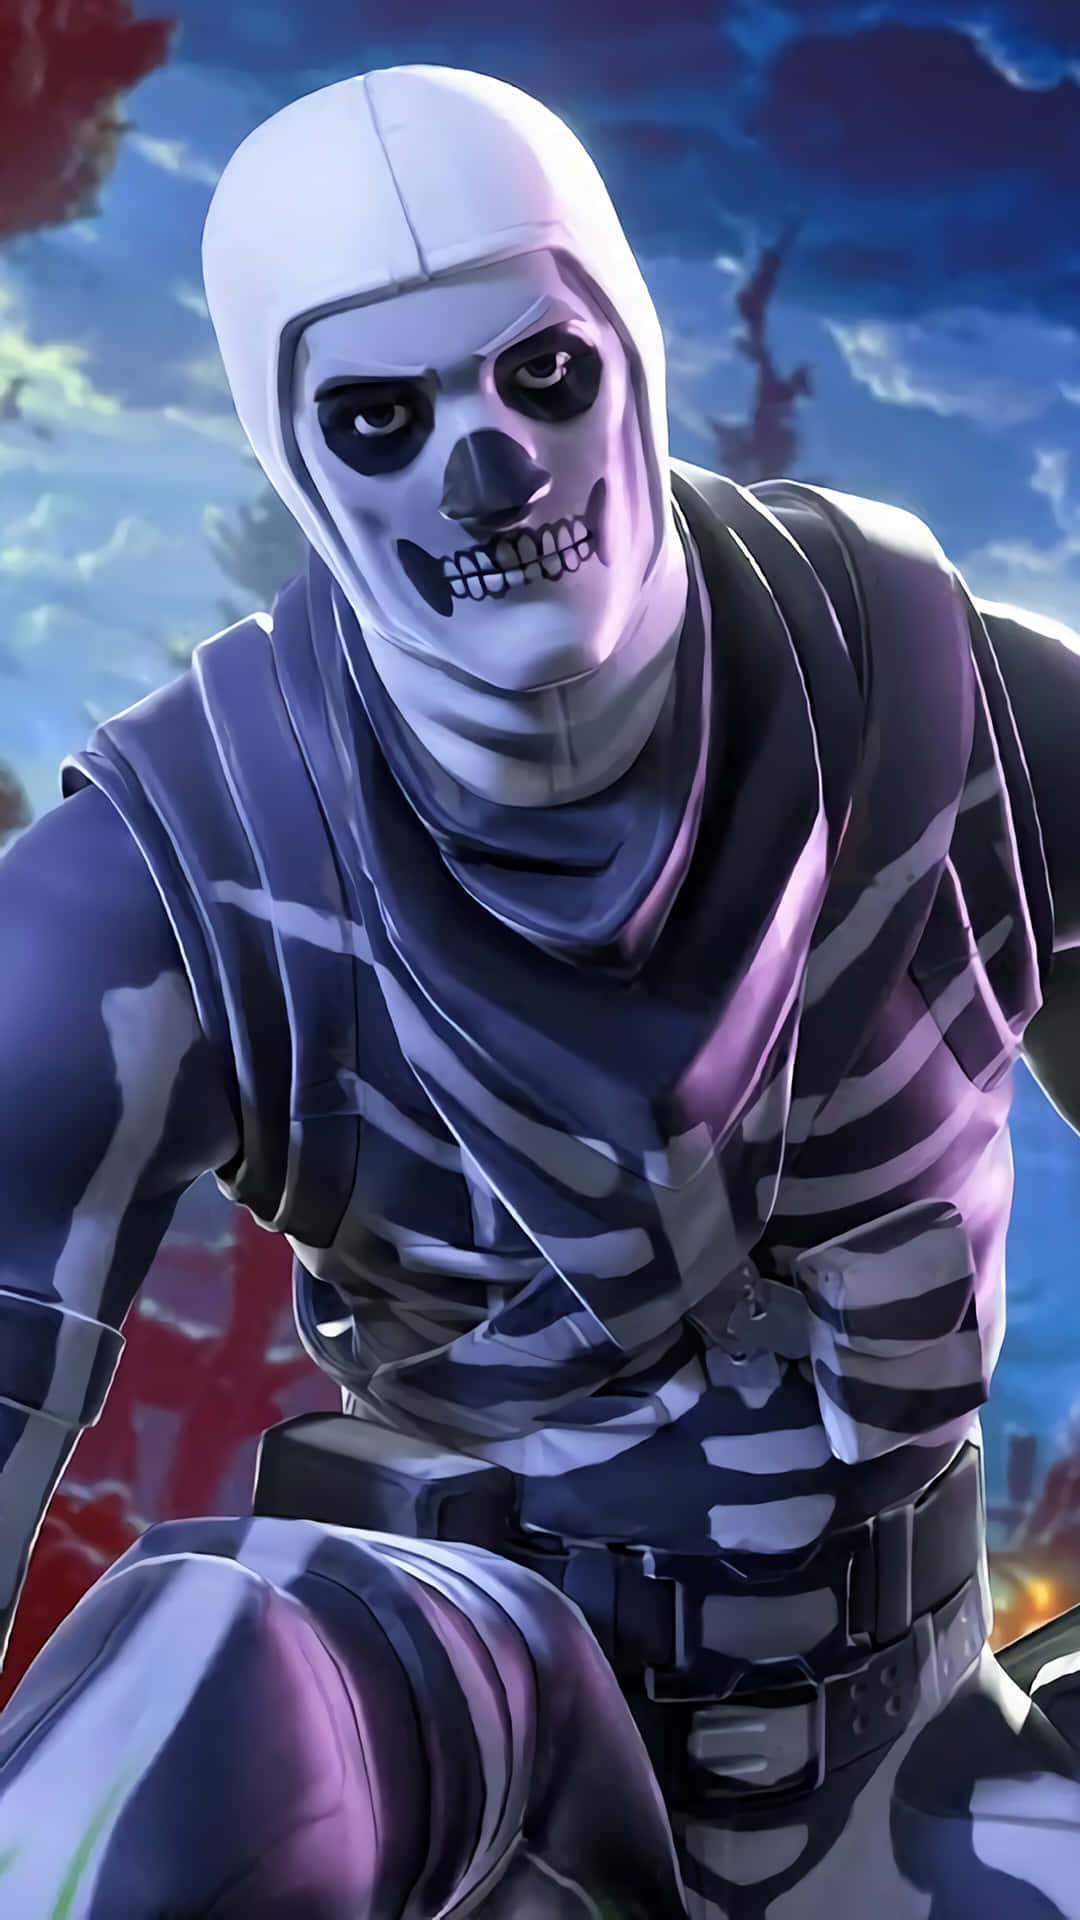 Entfessledein Inneres Gamer Mit Dem Neuen Purple Skull Trooper Outfit! Wallpaper